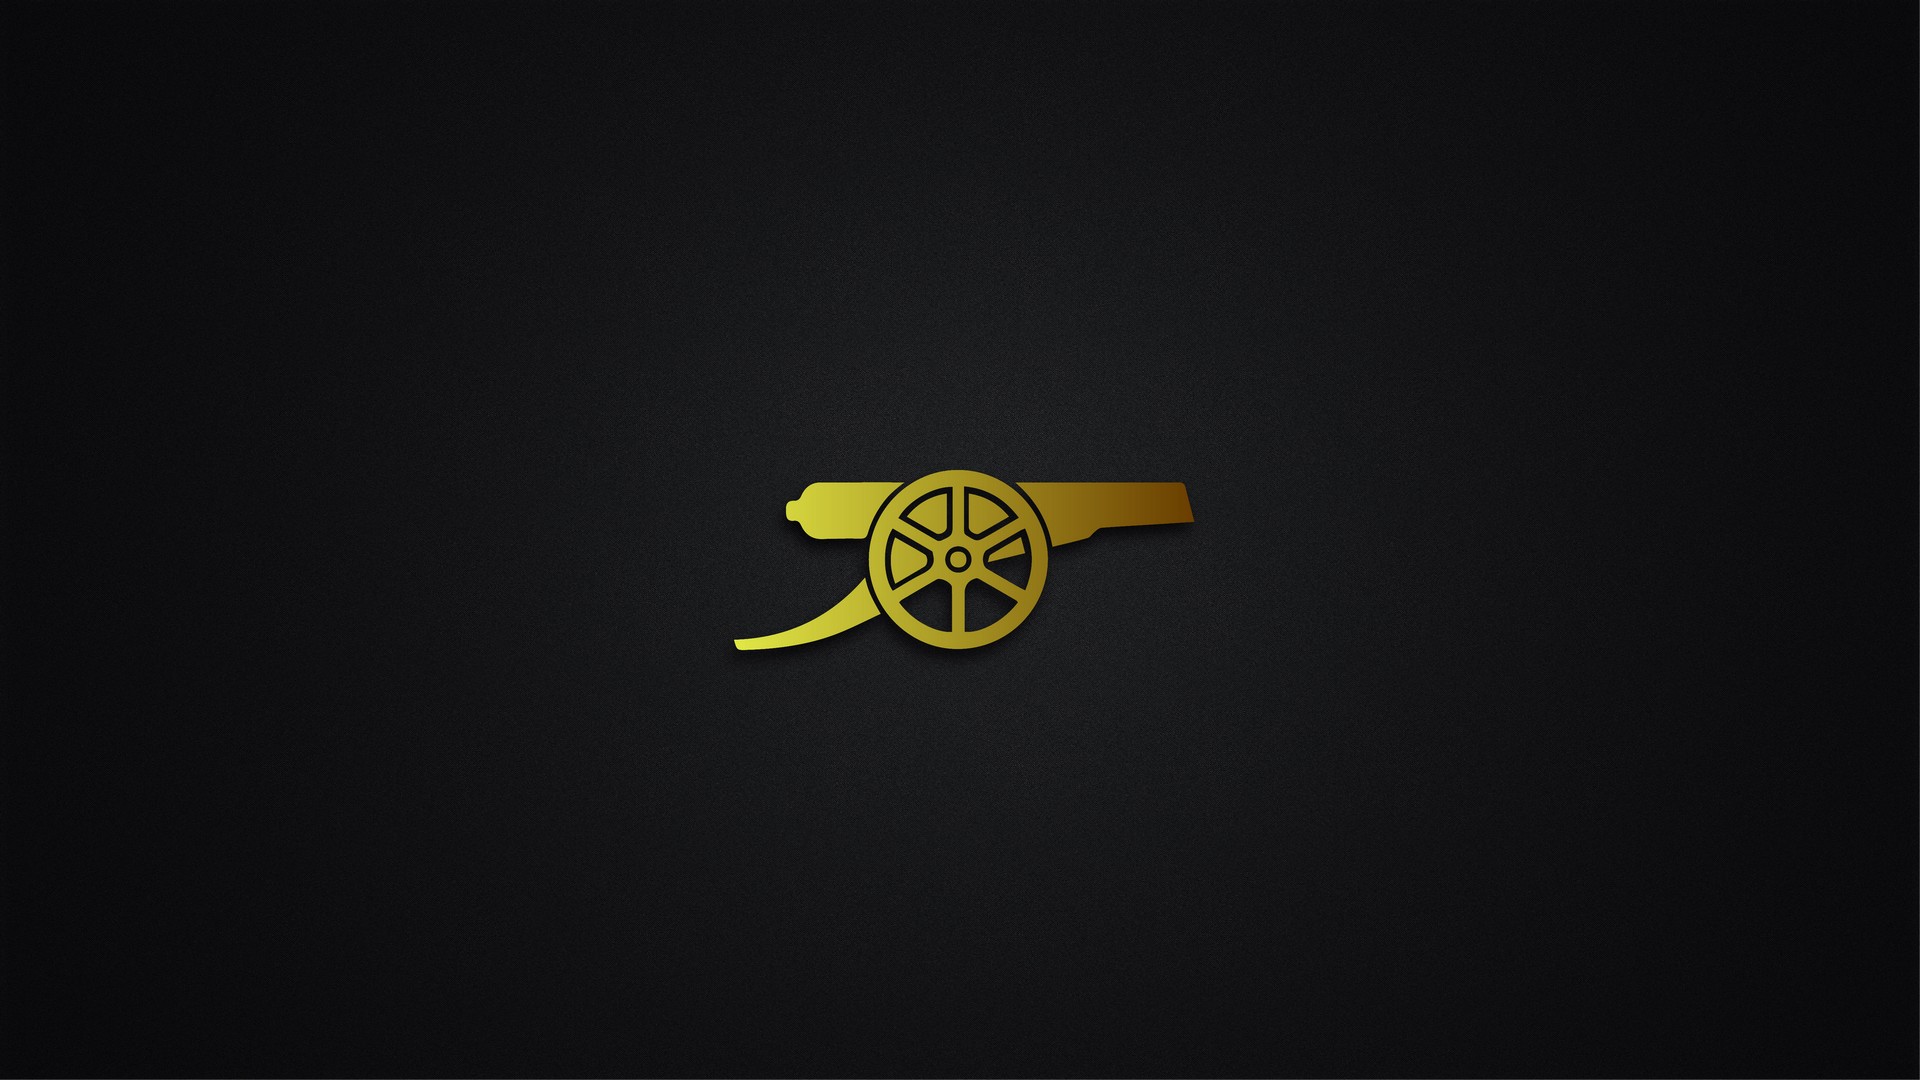 Arsenal Fc Logo Wallpaper Hd 2020 Live Wallpaper Hd